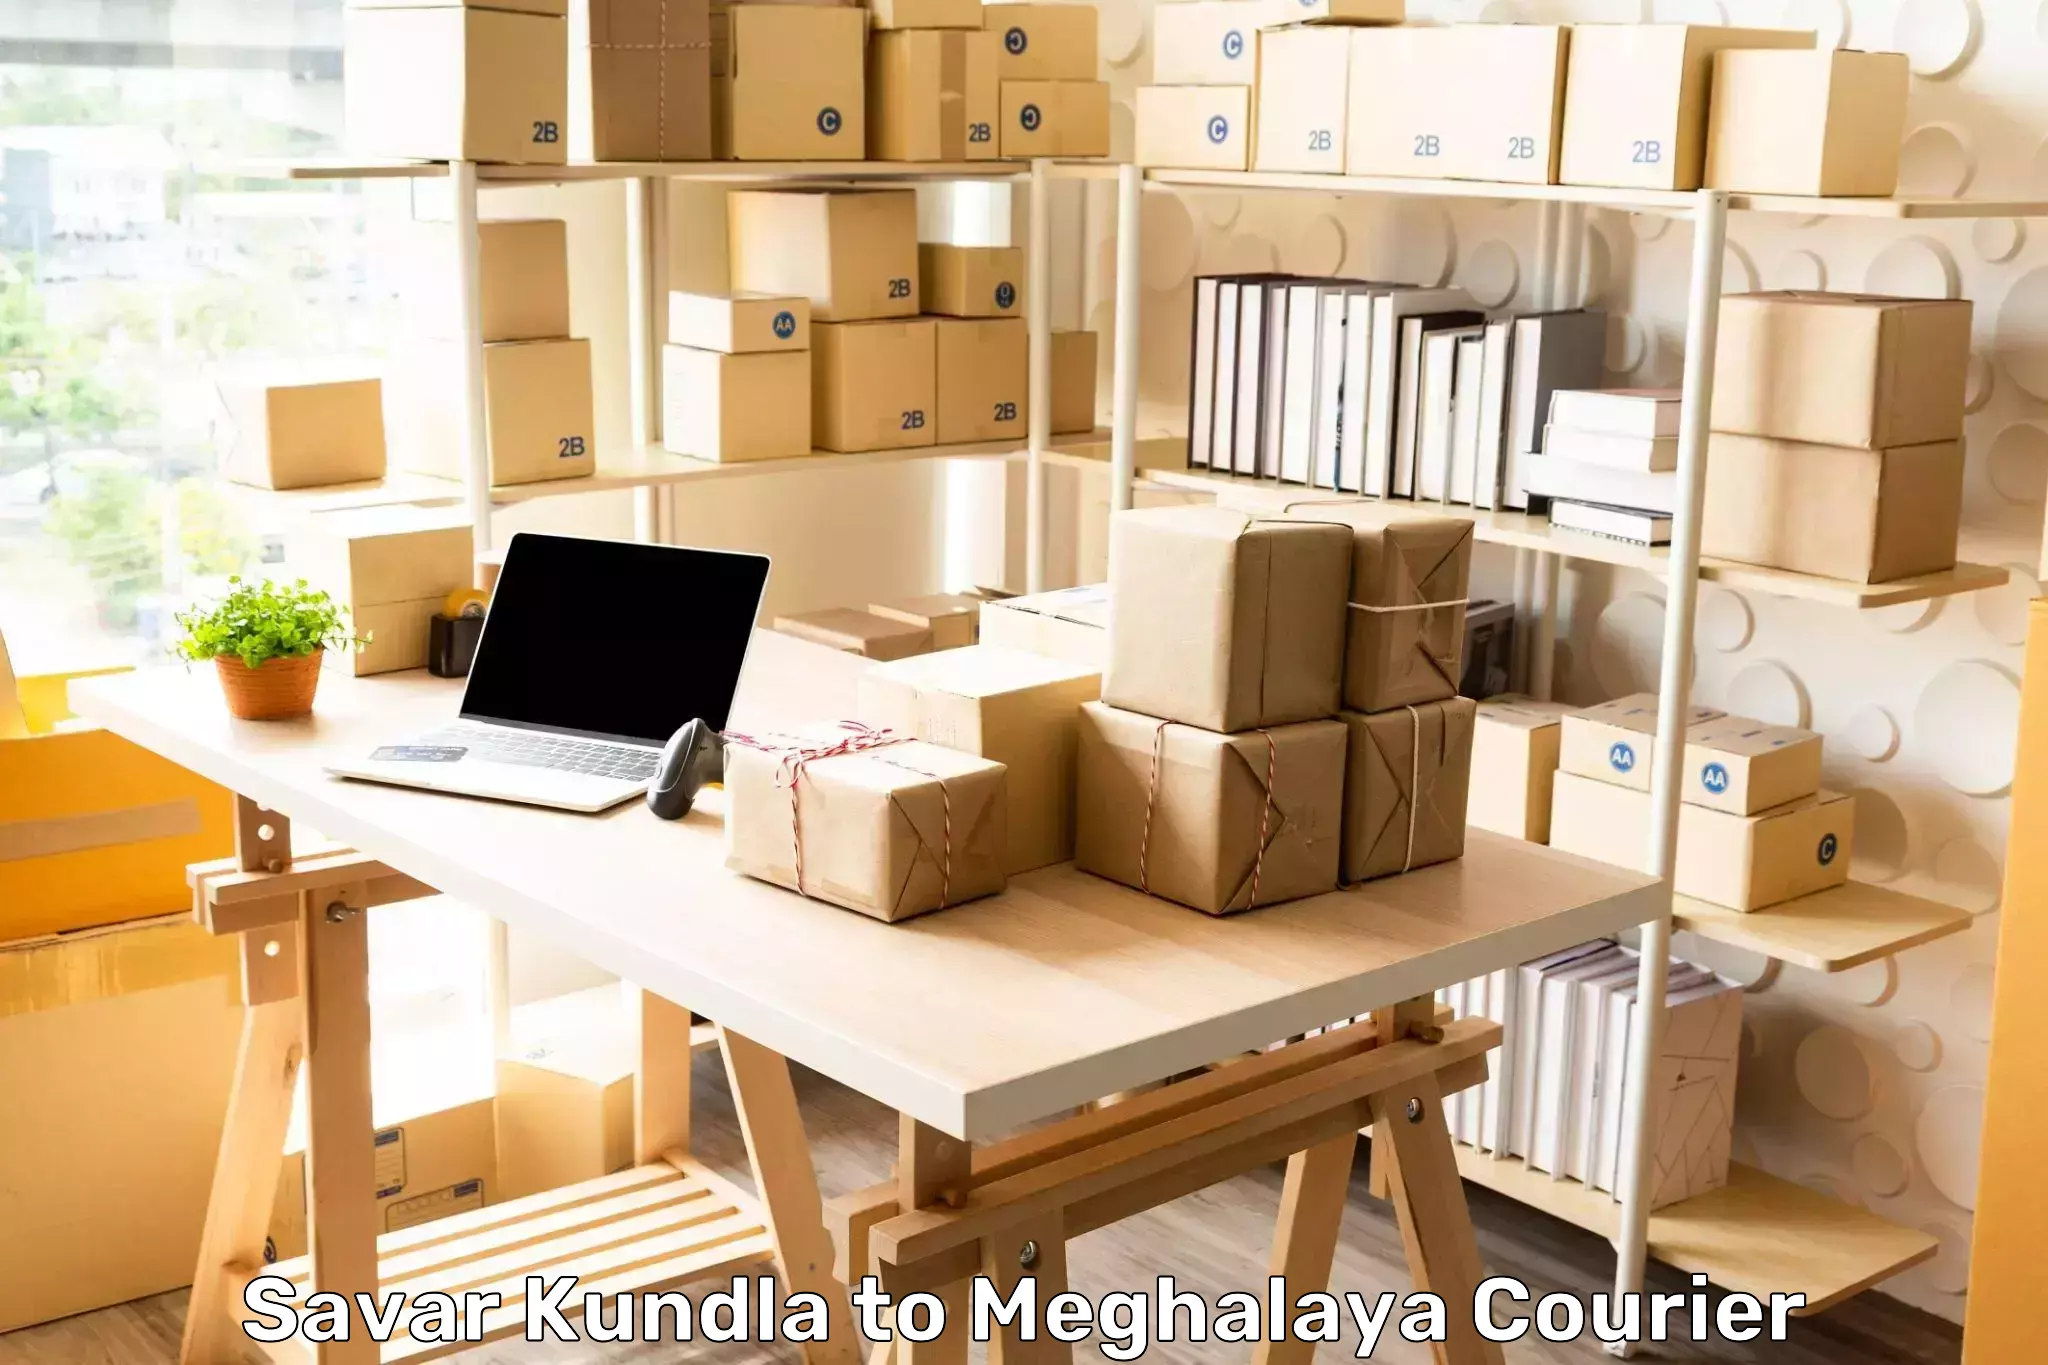 High-capacity courier solutions Savar Kundla to Meghalaya